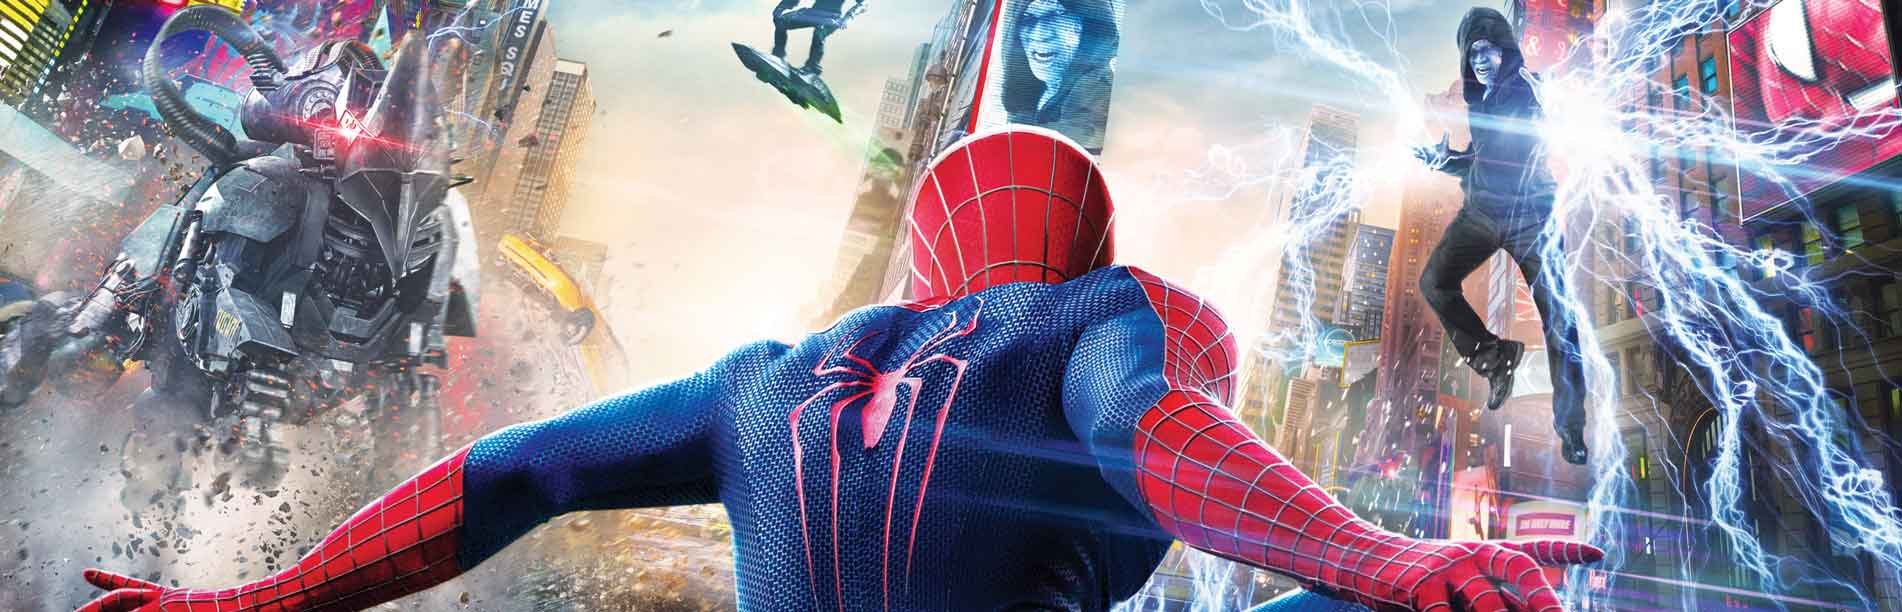 Amazing Spider Man 2 Soundtrack